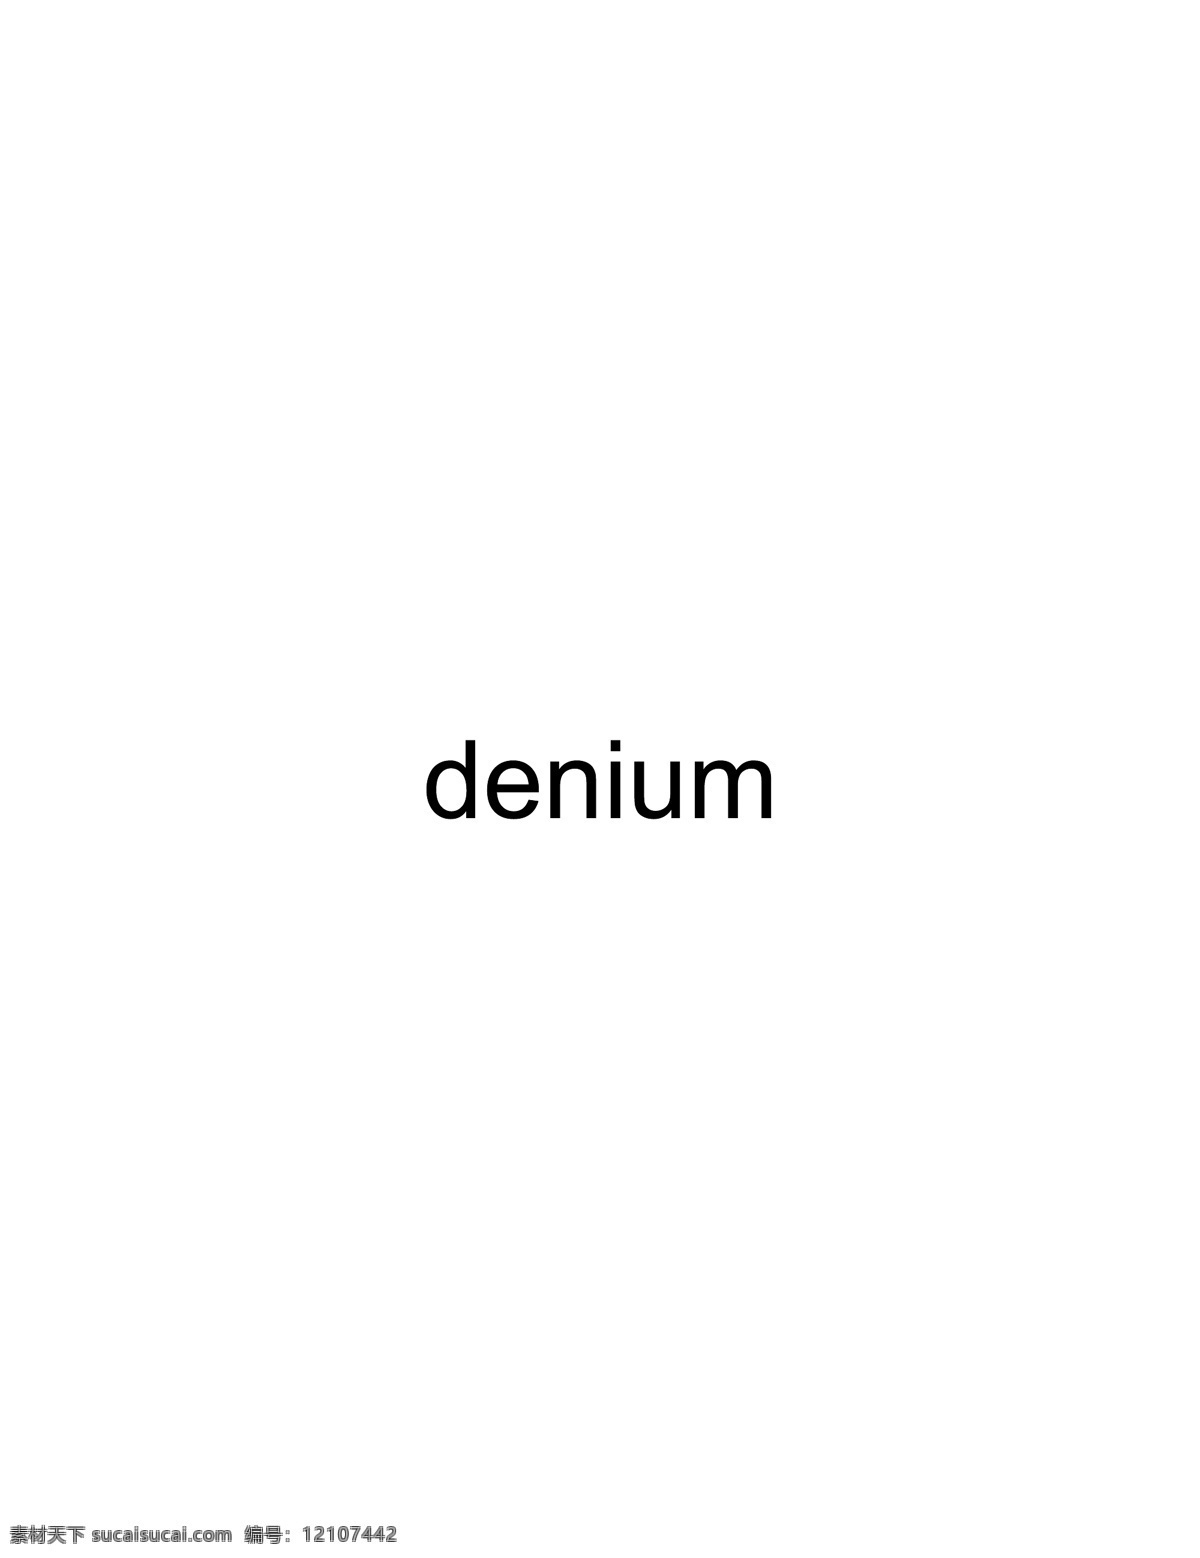 denium logo大全 logo 设计欣赏 商业矢量 矢量下载 服饰 品牌 标志 标志设计 欣赏 网页矢量 矢量图 其他矢量图